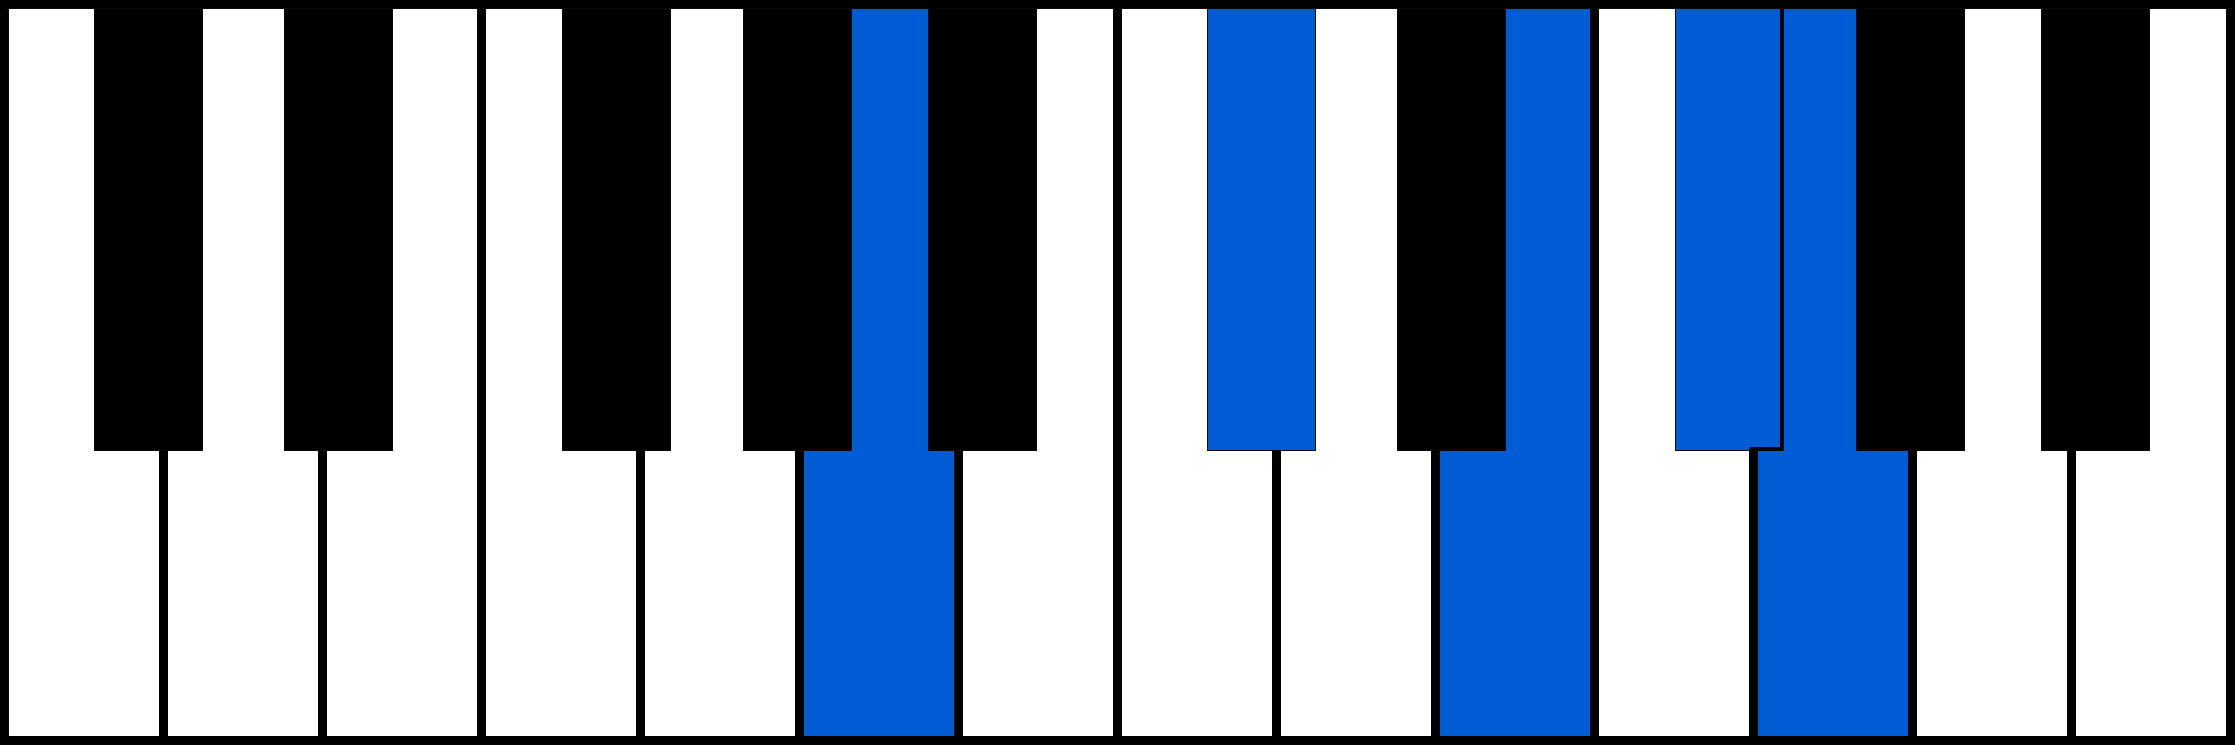 A7/6 piano chord